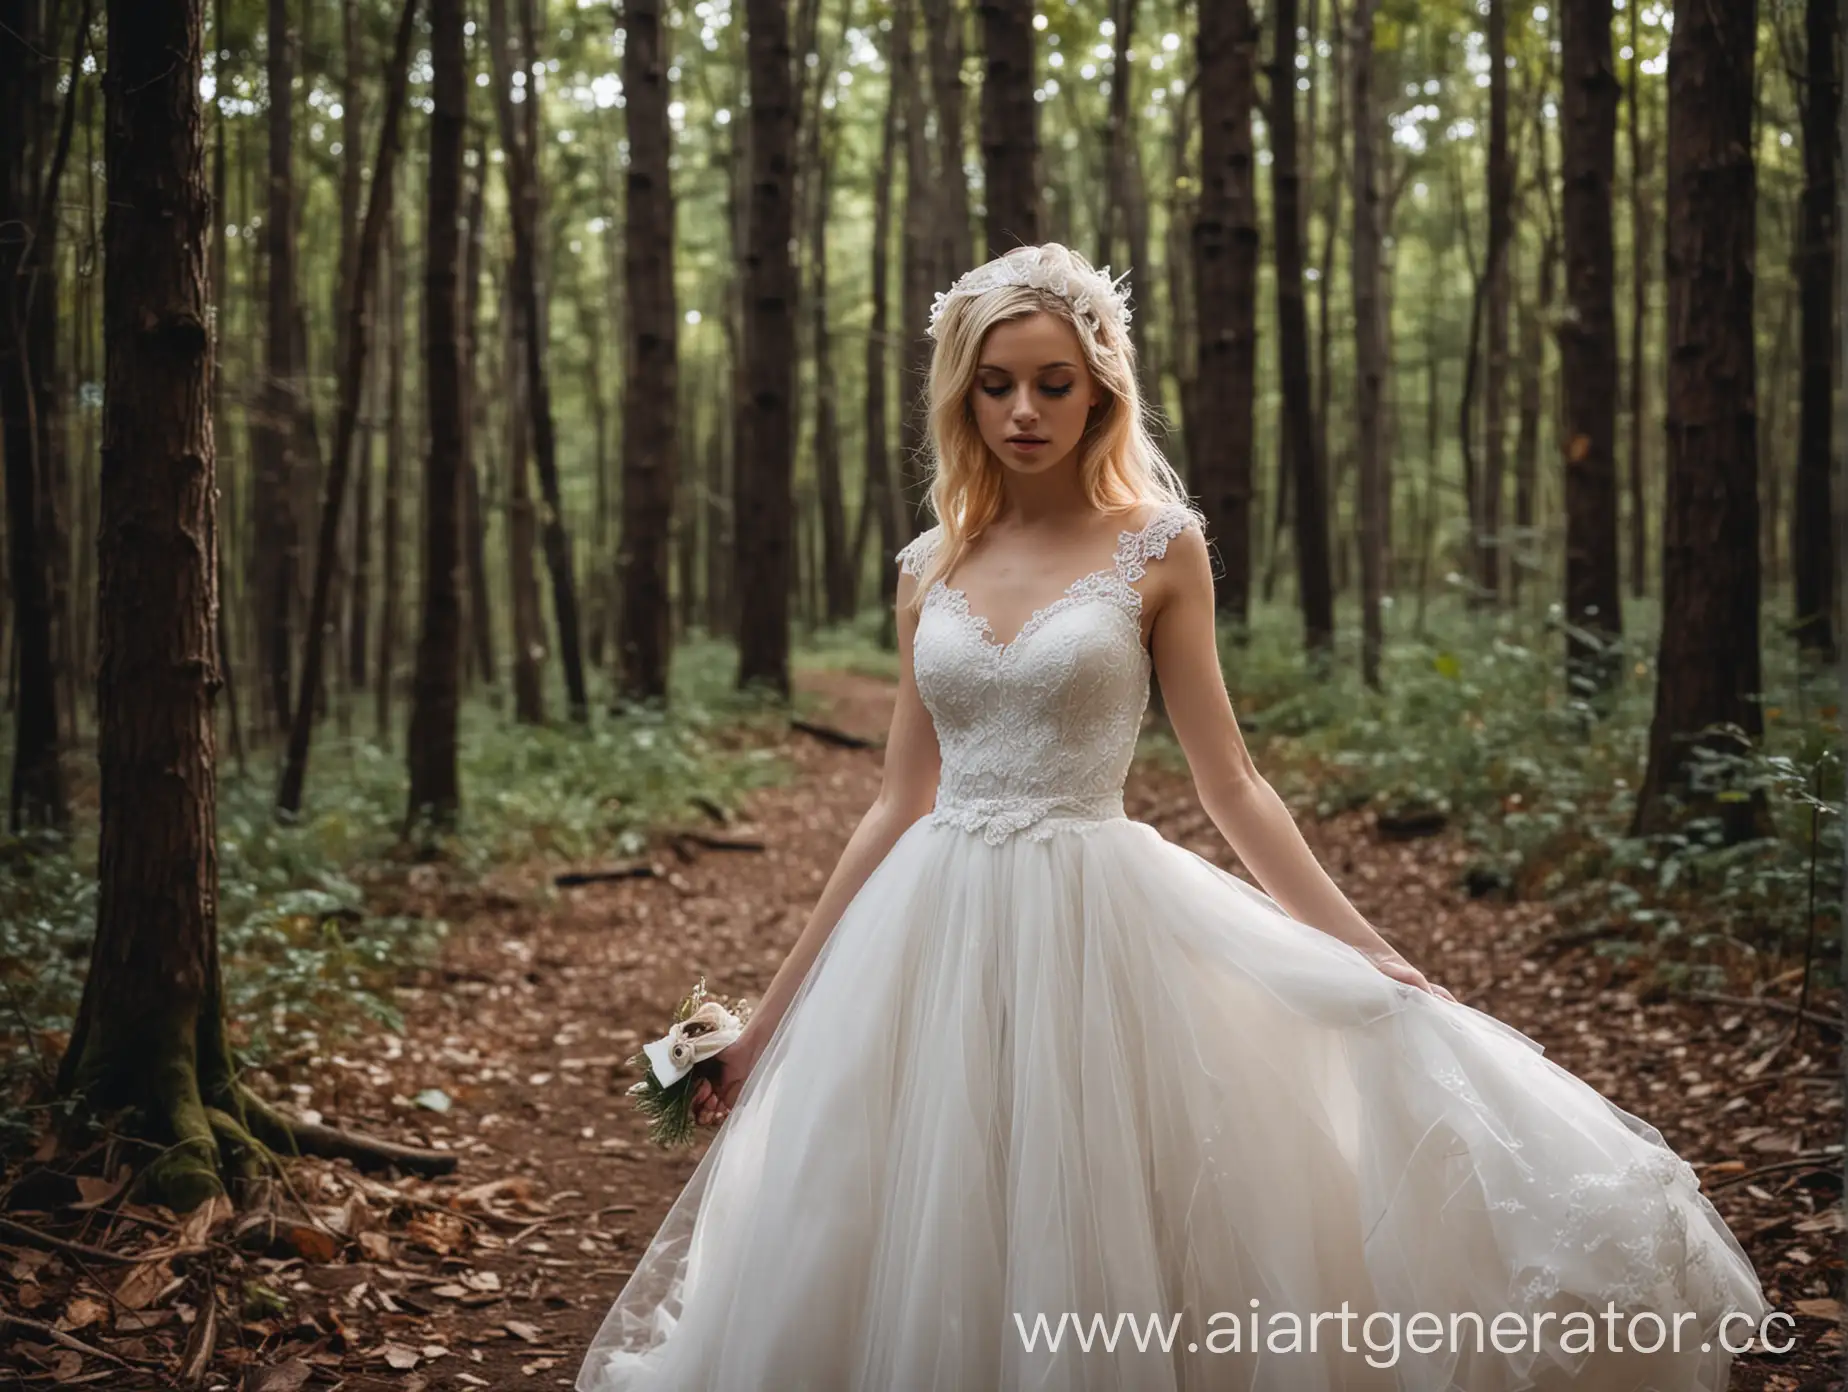 Enchanting-Forest-Wedding-Beautiful-Bride-Amidst-Natures-Splendor